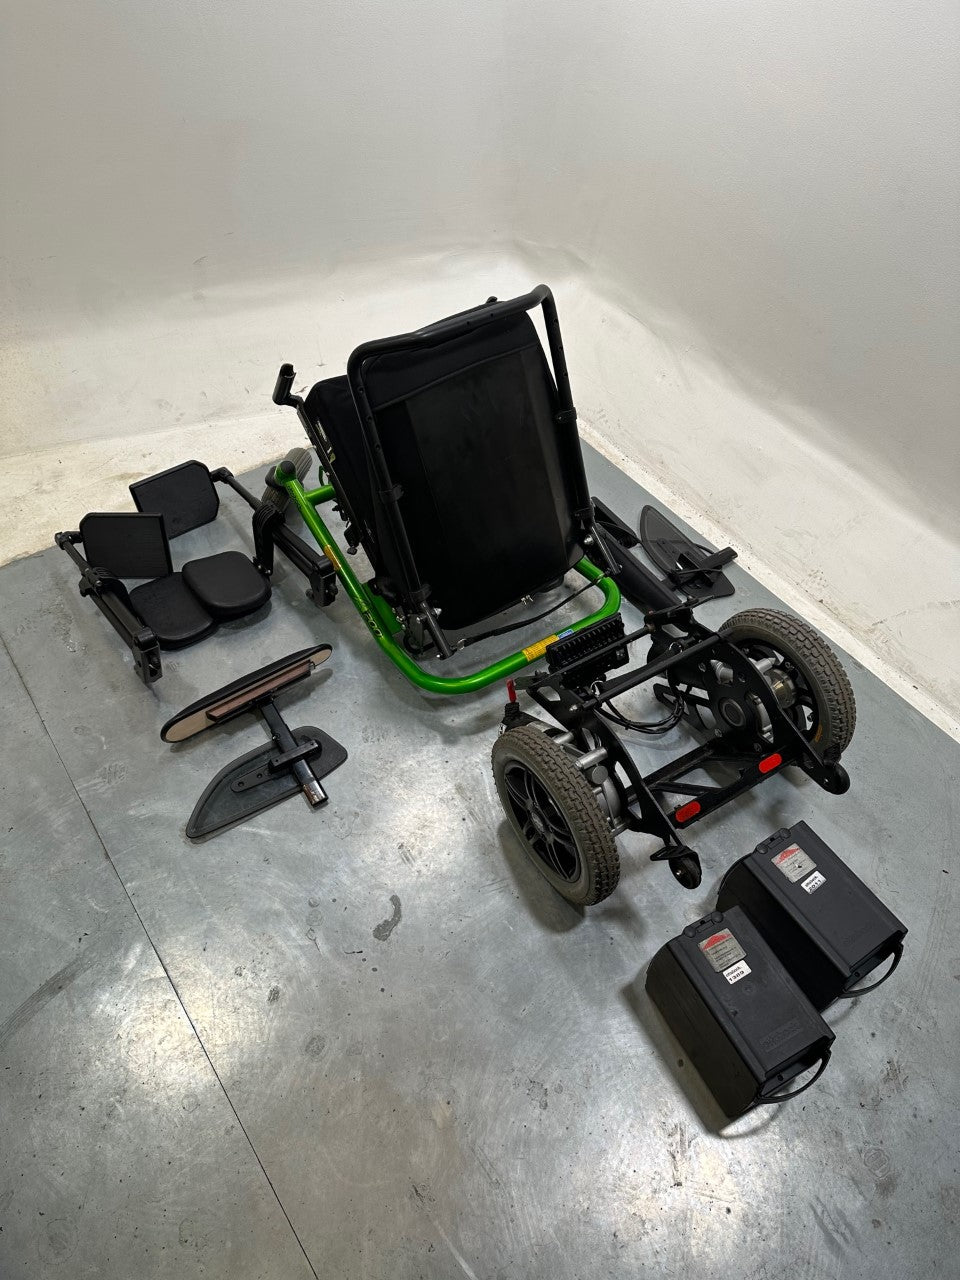 Ottobock A200 Powerchair Electric Wheelchair RWD Green All-Terrain